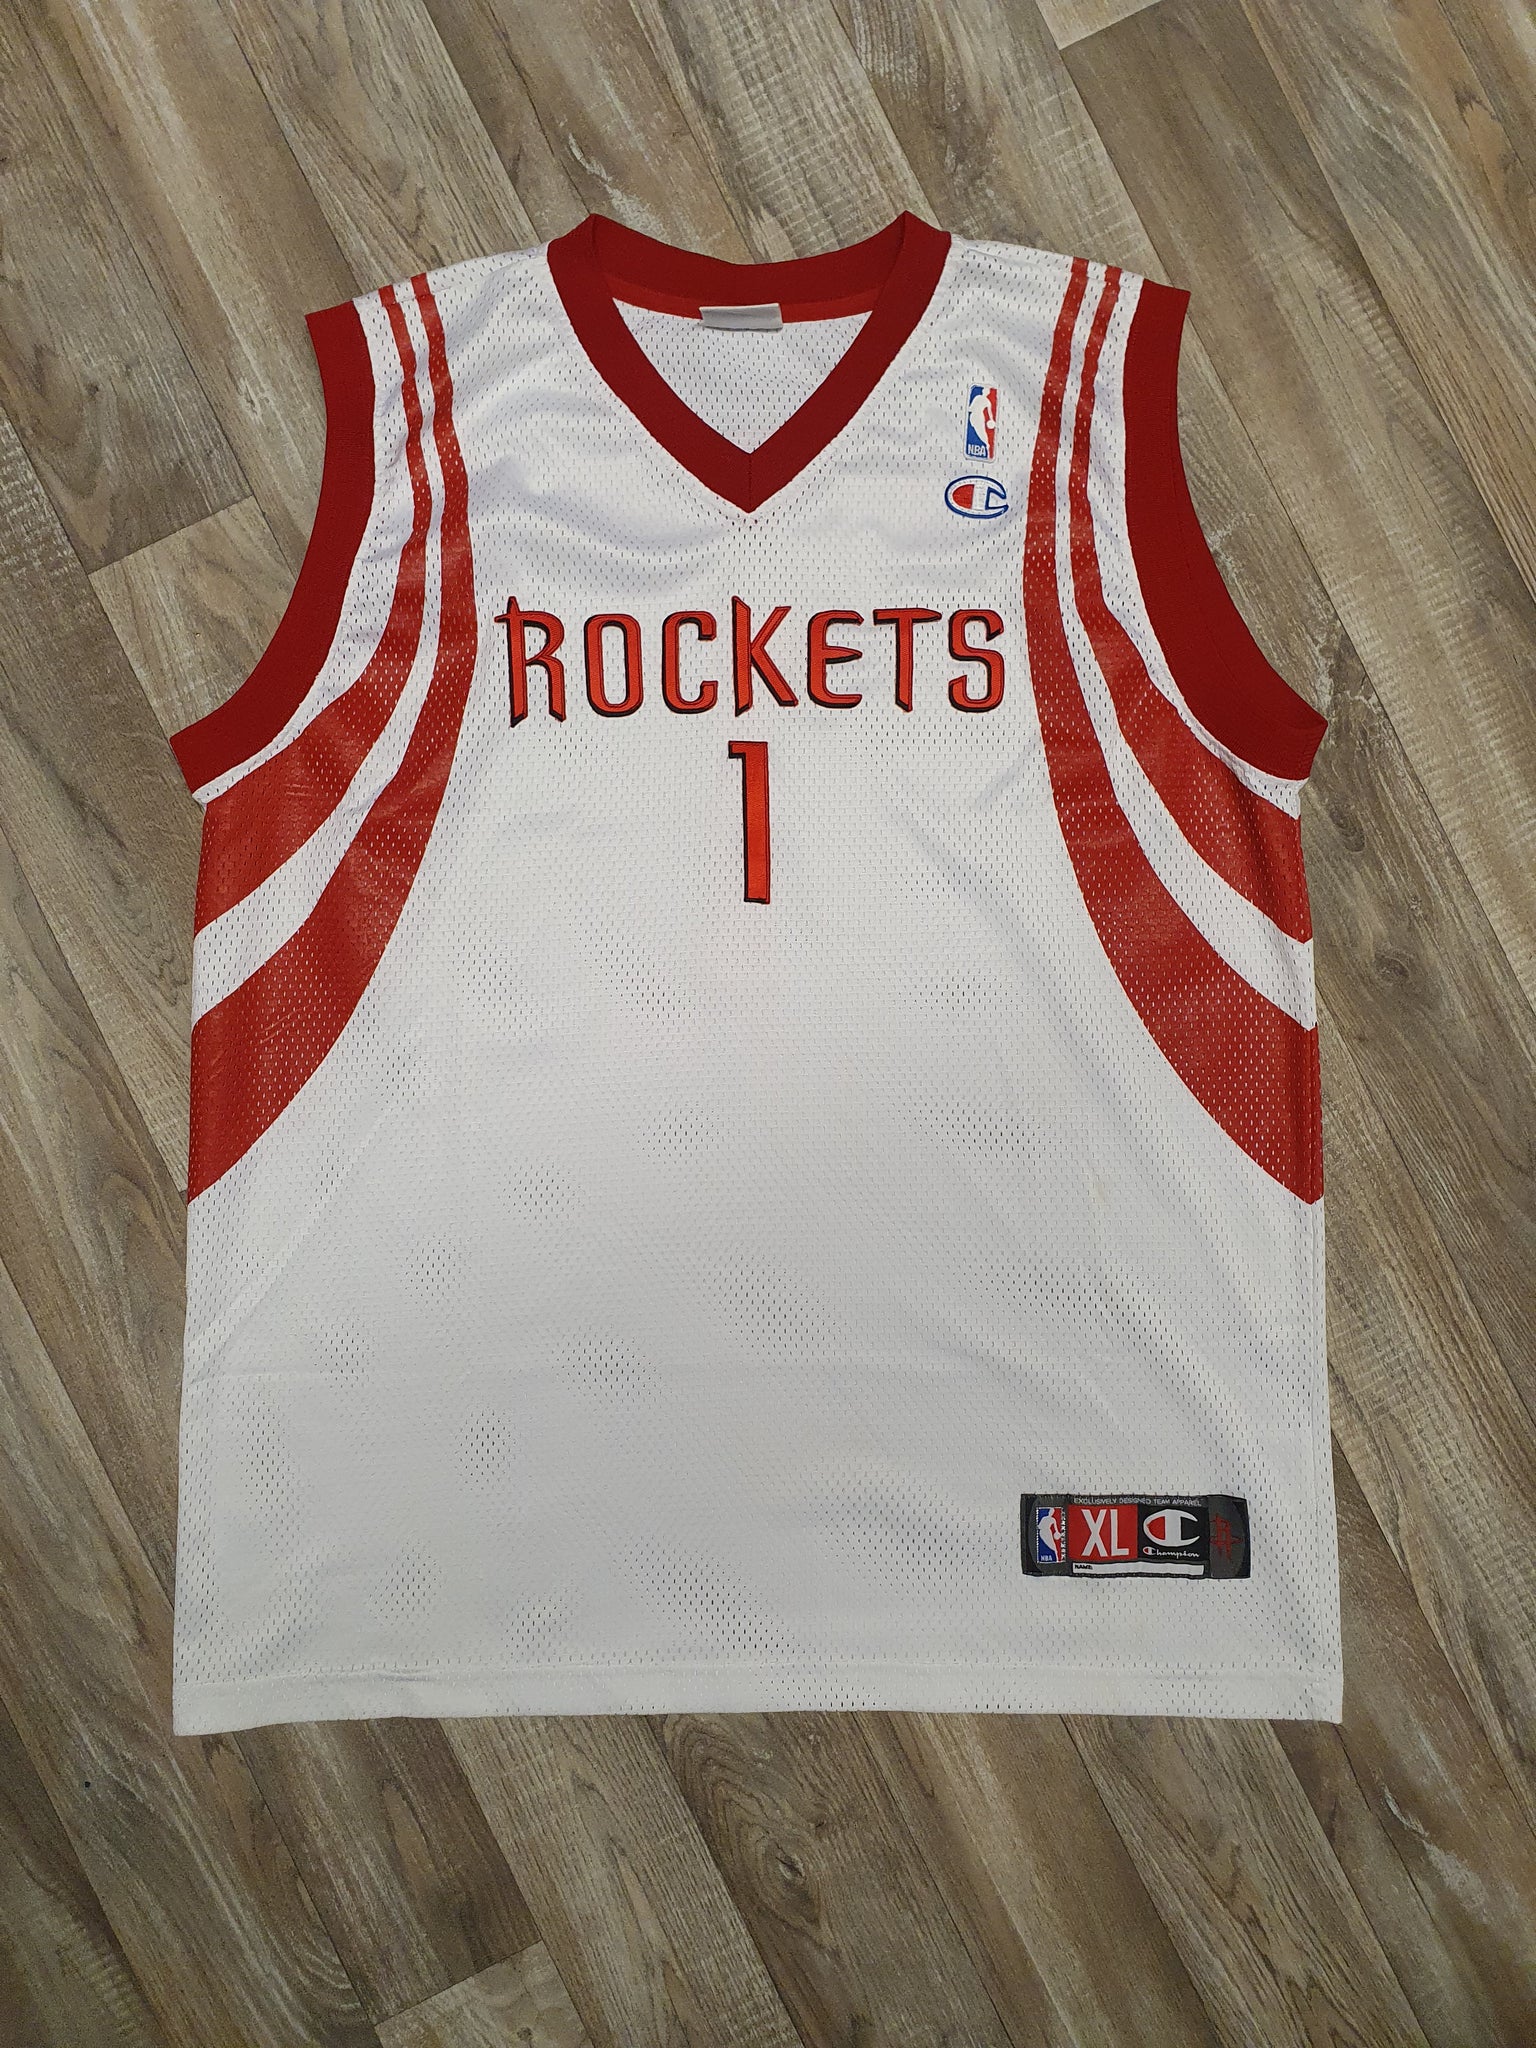 🏀 Tracy McGrady Houston Rockets Jersey Size XL – The Throwback